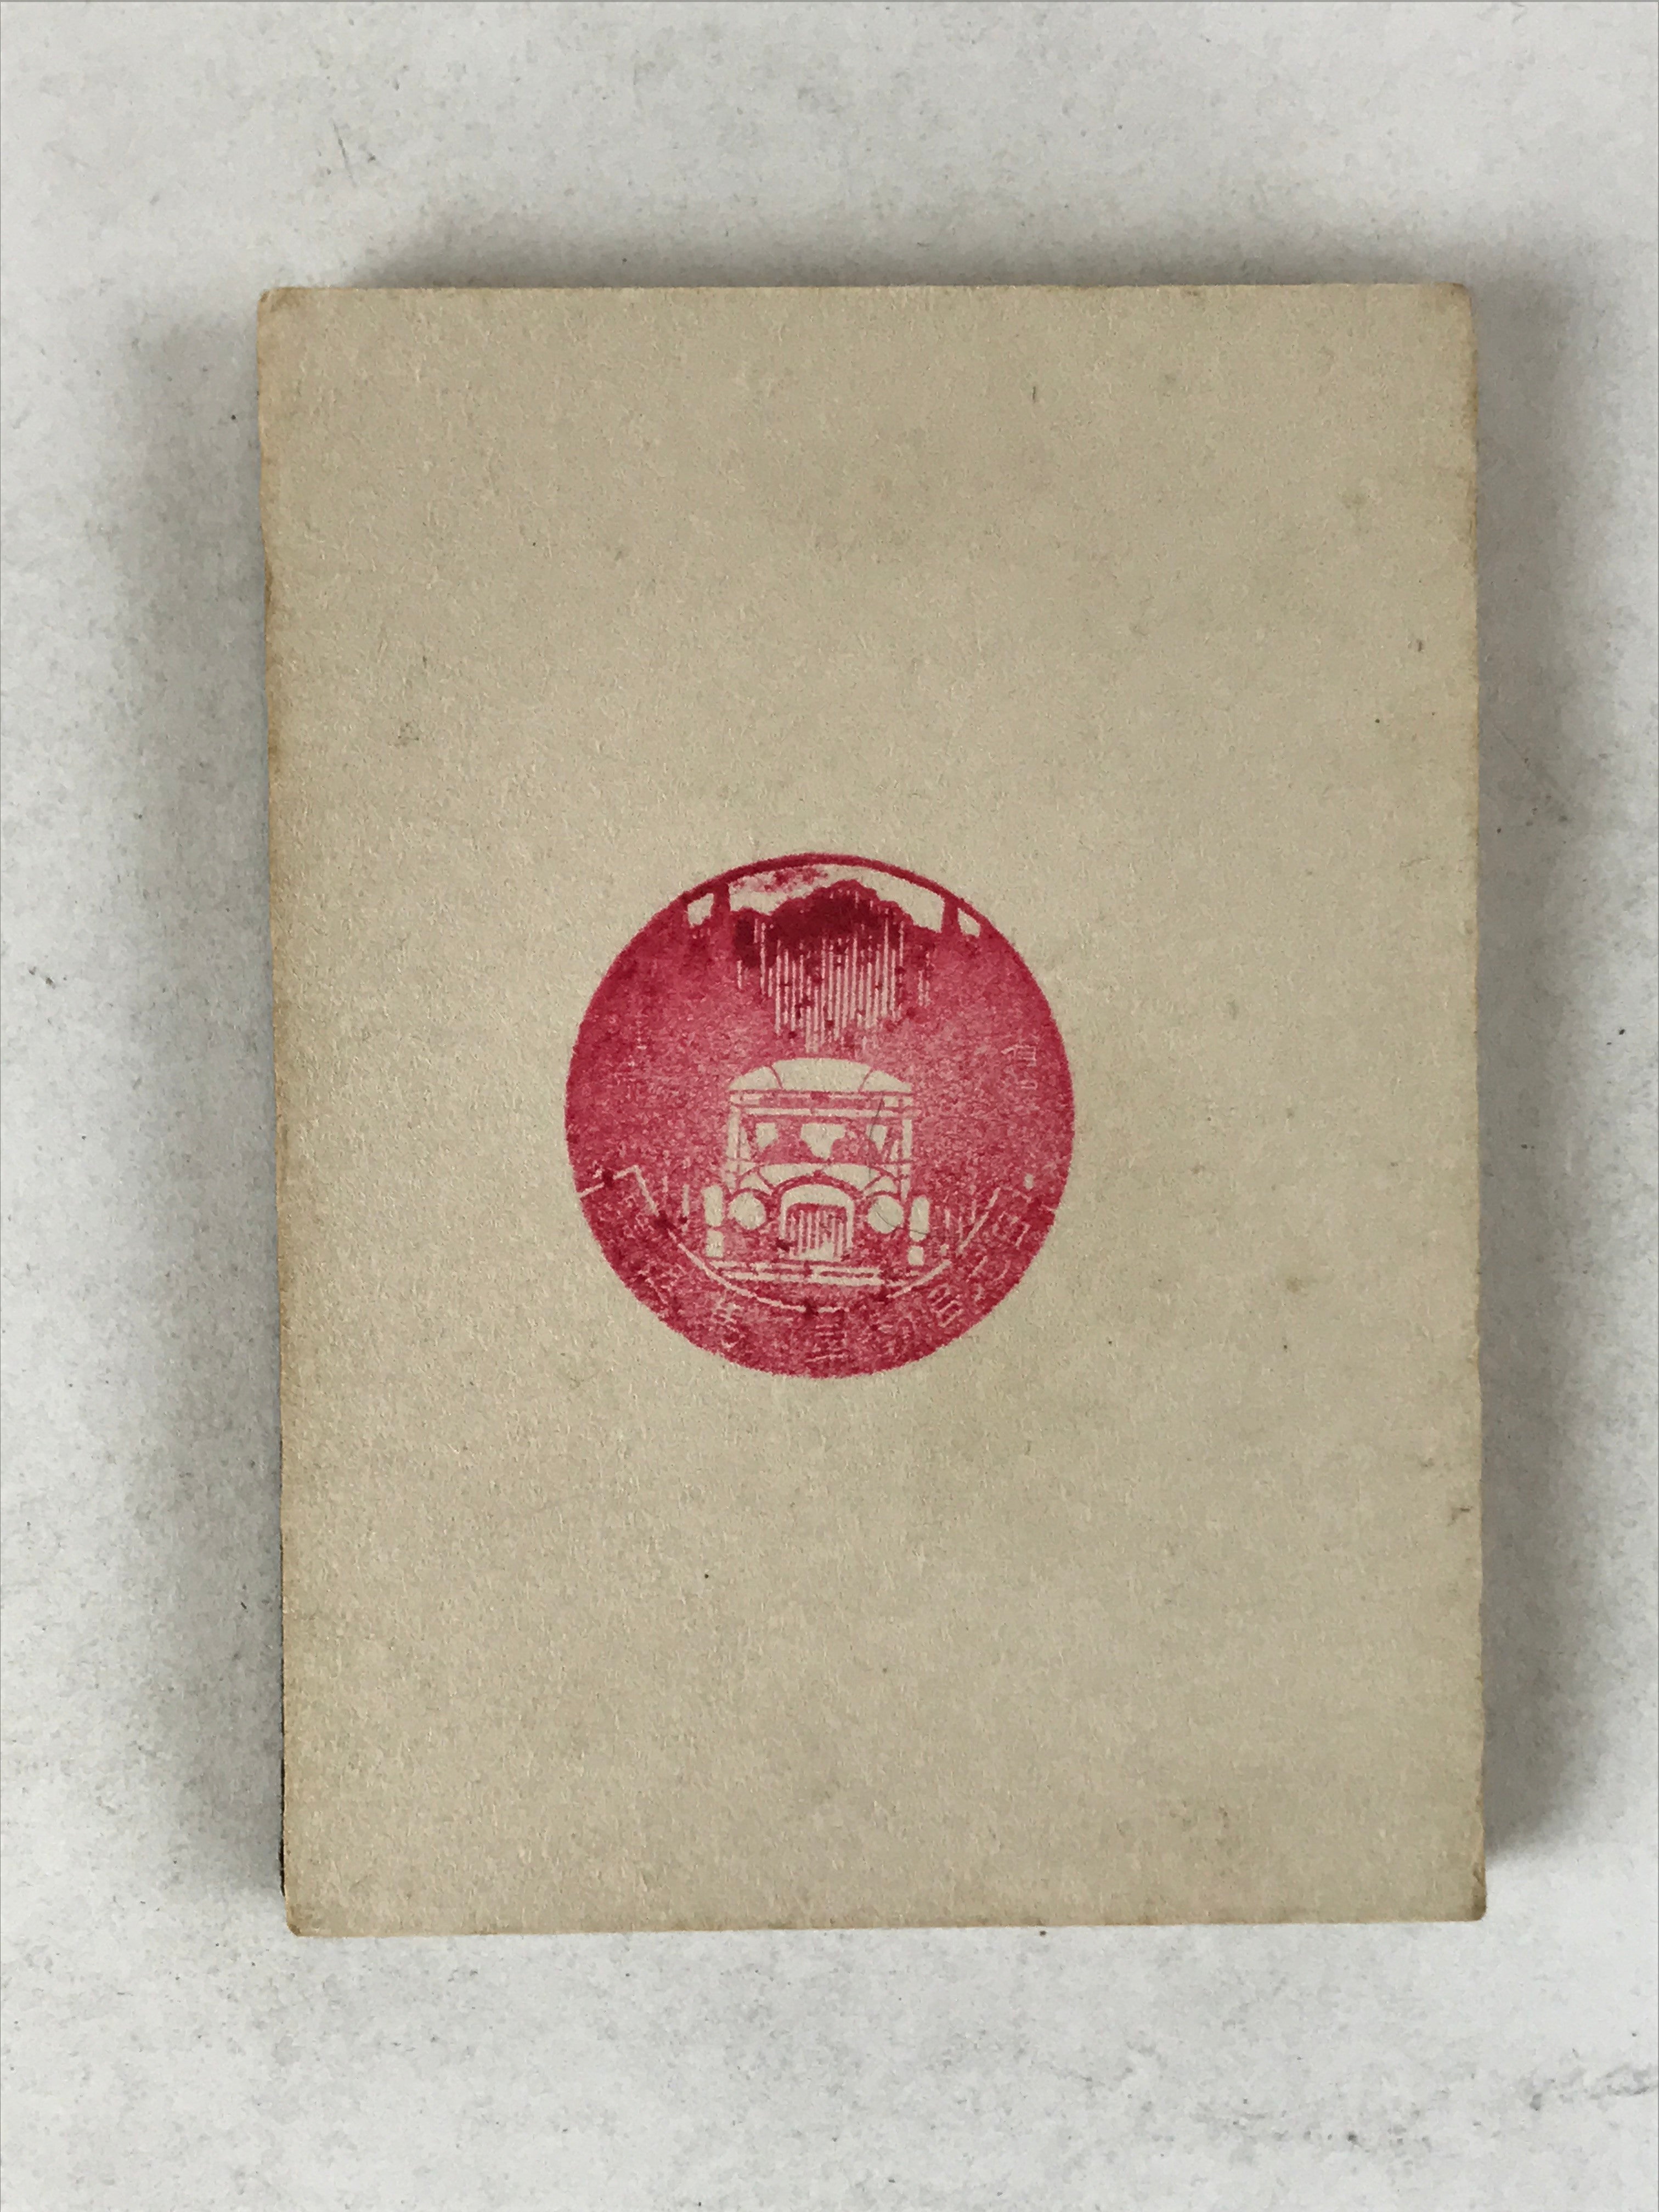 Japanese Seal Stamp Shuin Book C1930 Nagoya Tokyo Famous Location Brown BA268